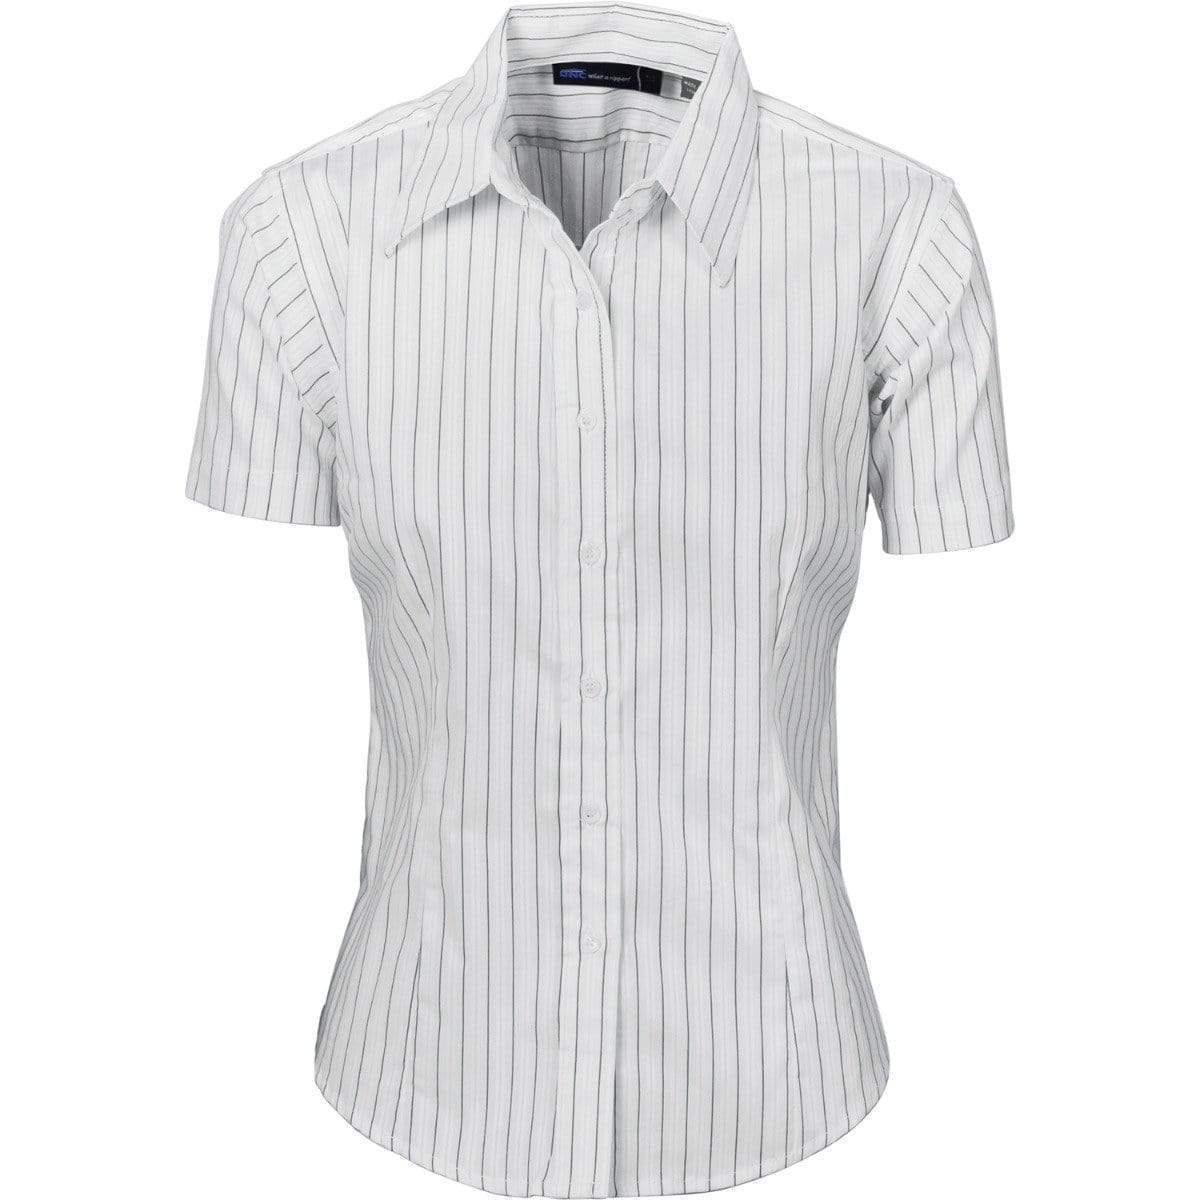 DNC WORKWEAR Ladies Stretch Yarn Dyed Contrast Stripe Short Sleeve Shirt 4233 - Simply Scrubs Australia